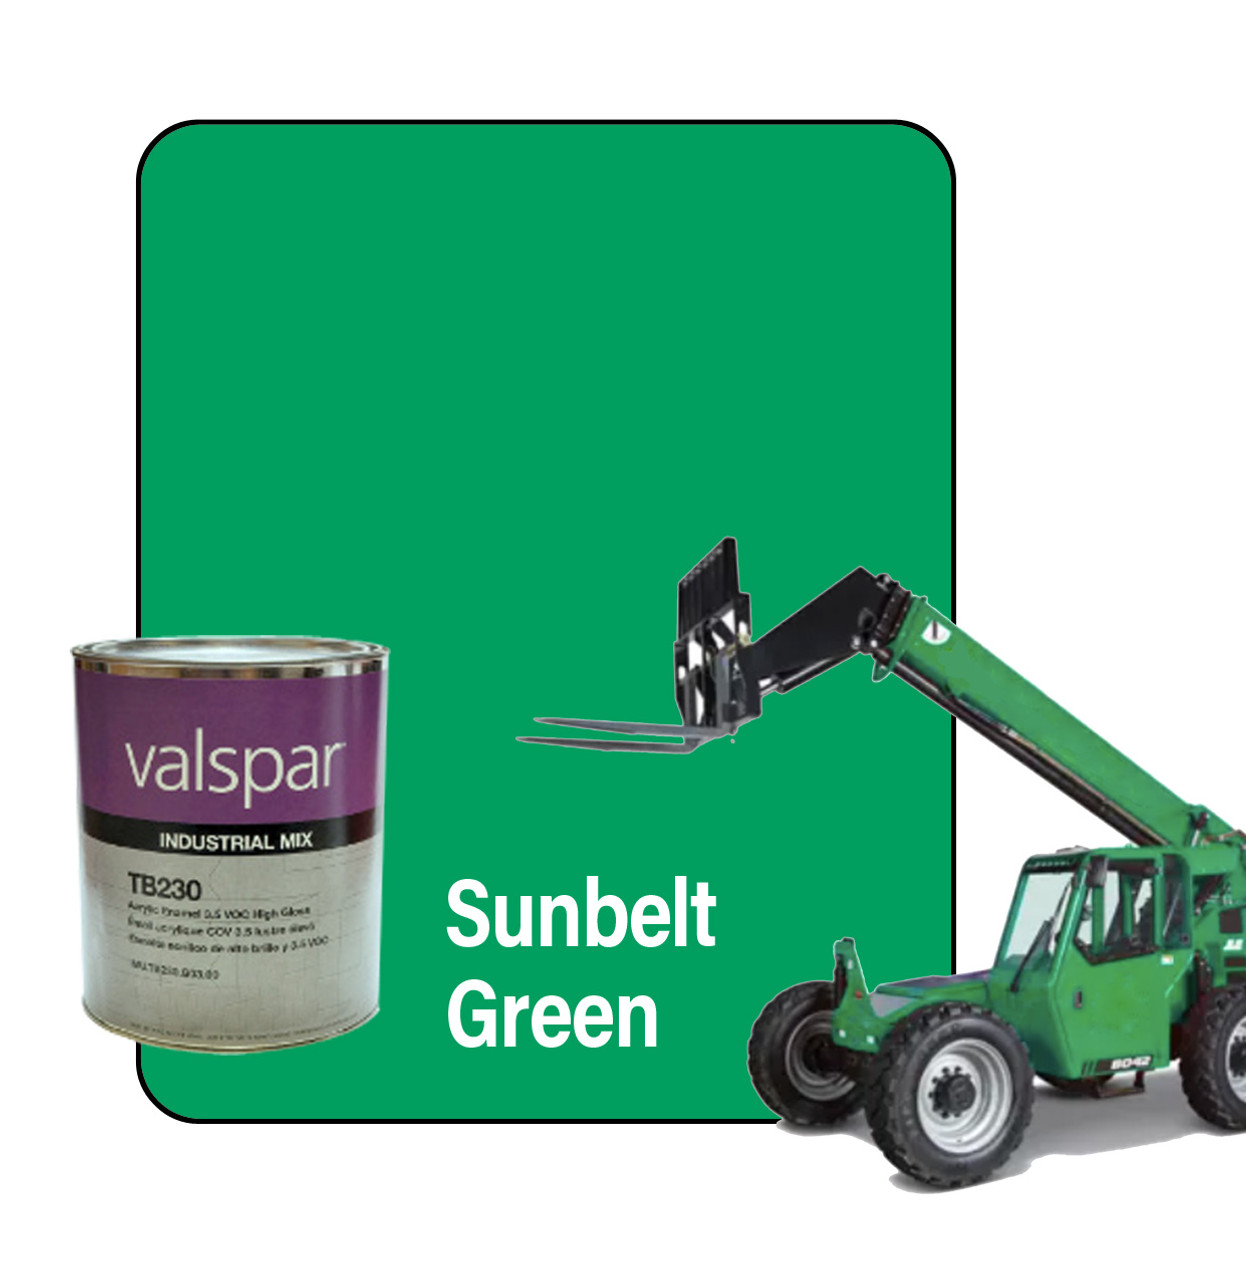 ProTouch Sunbelt Green Ready-to-Spray Paint Quart (Valspar TB230 Formula)